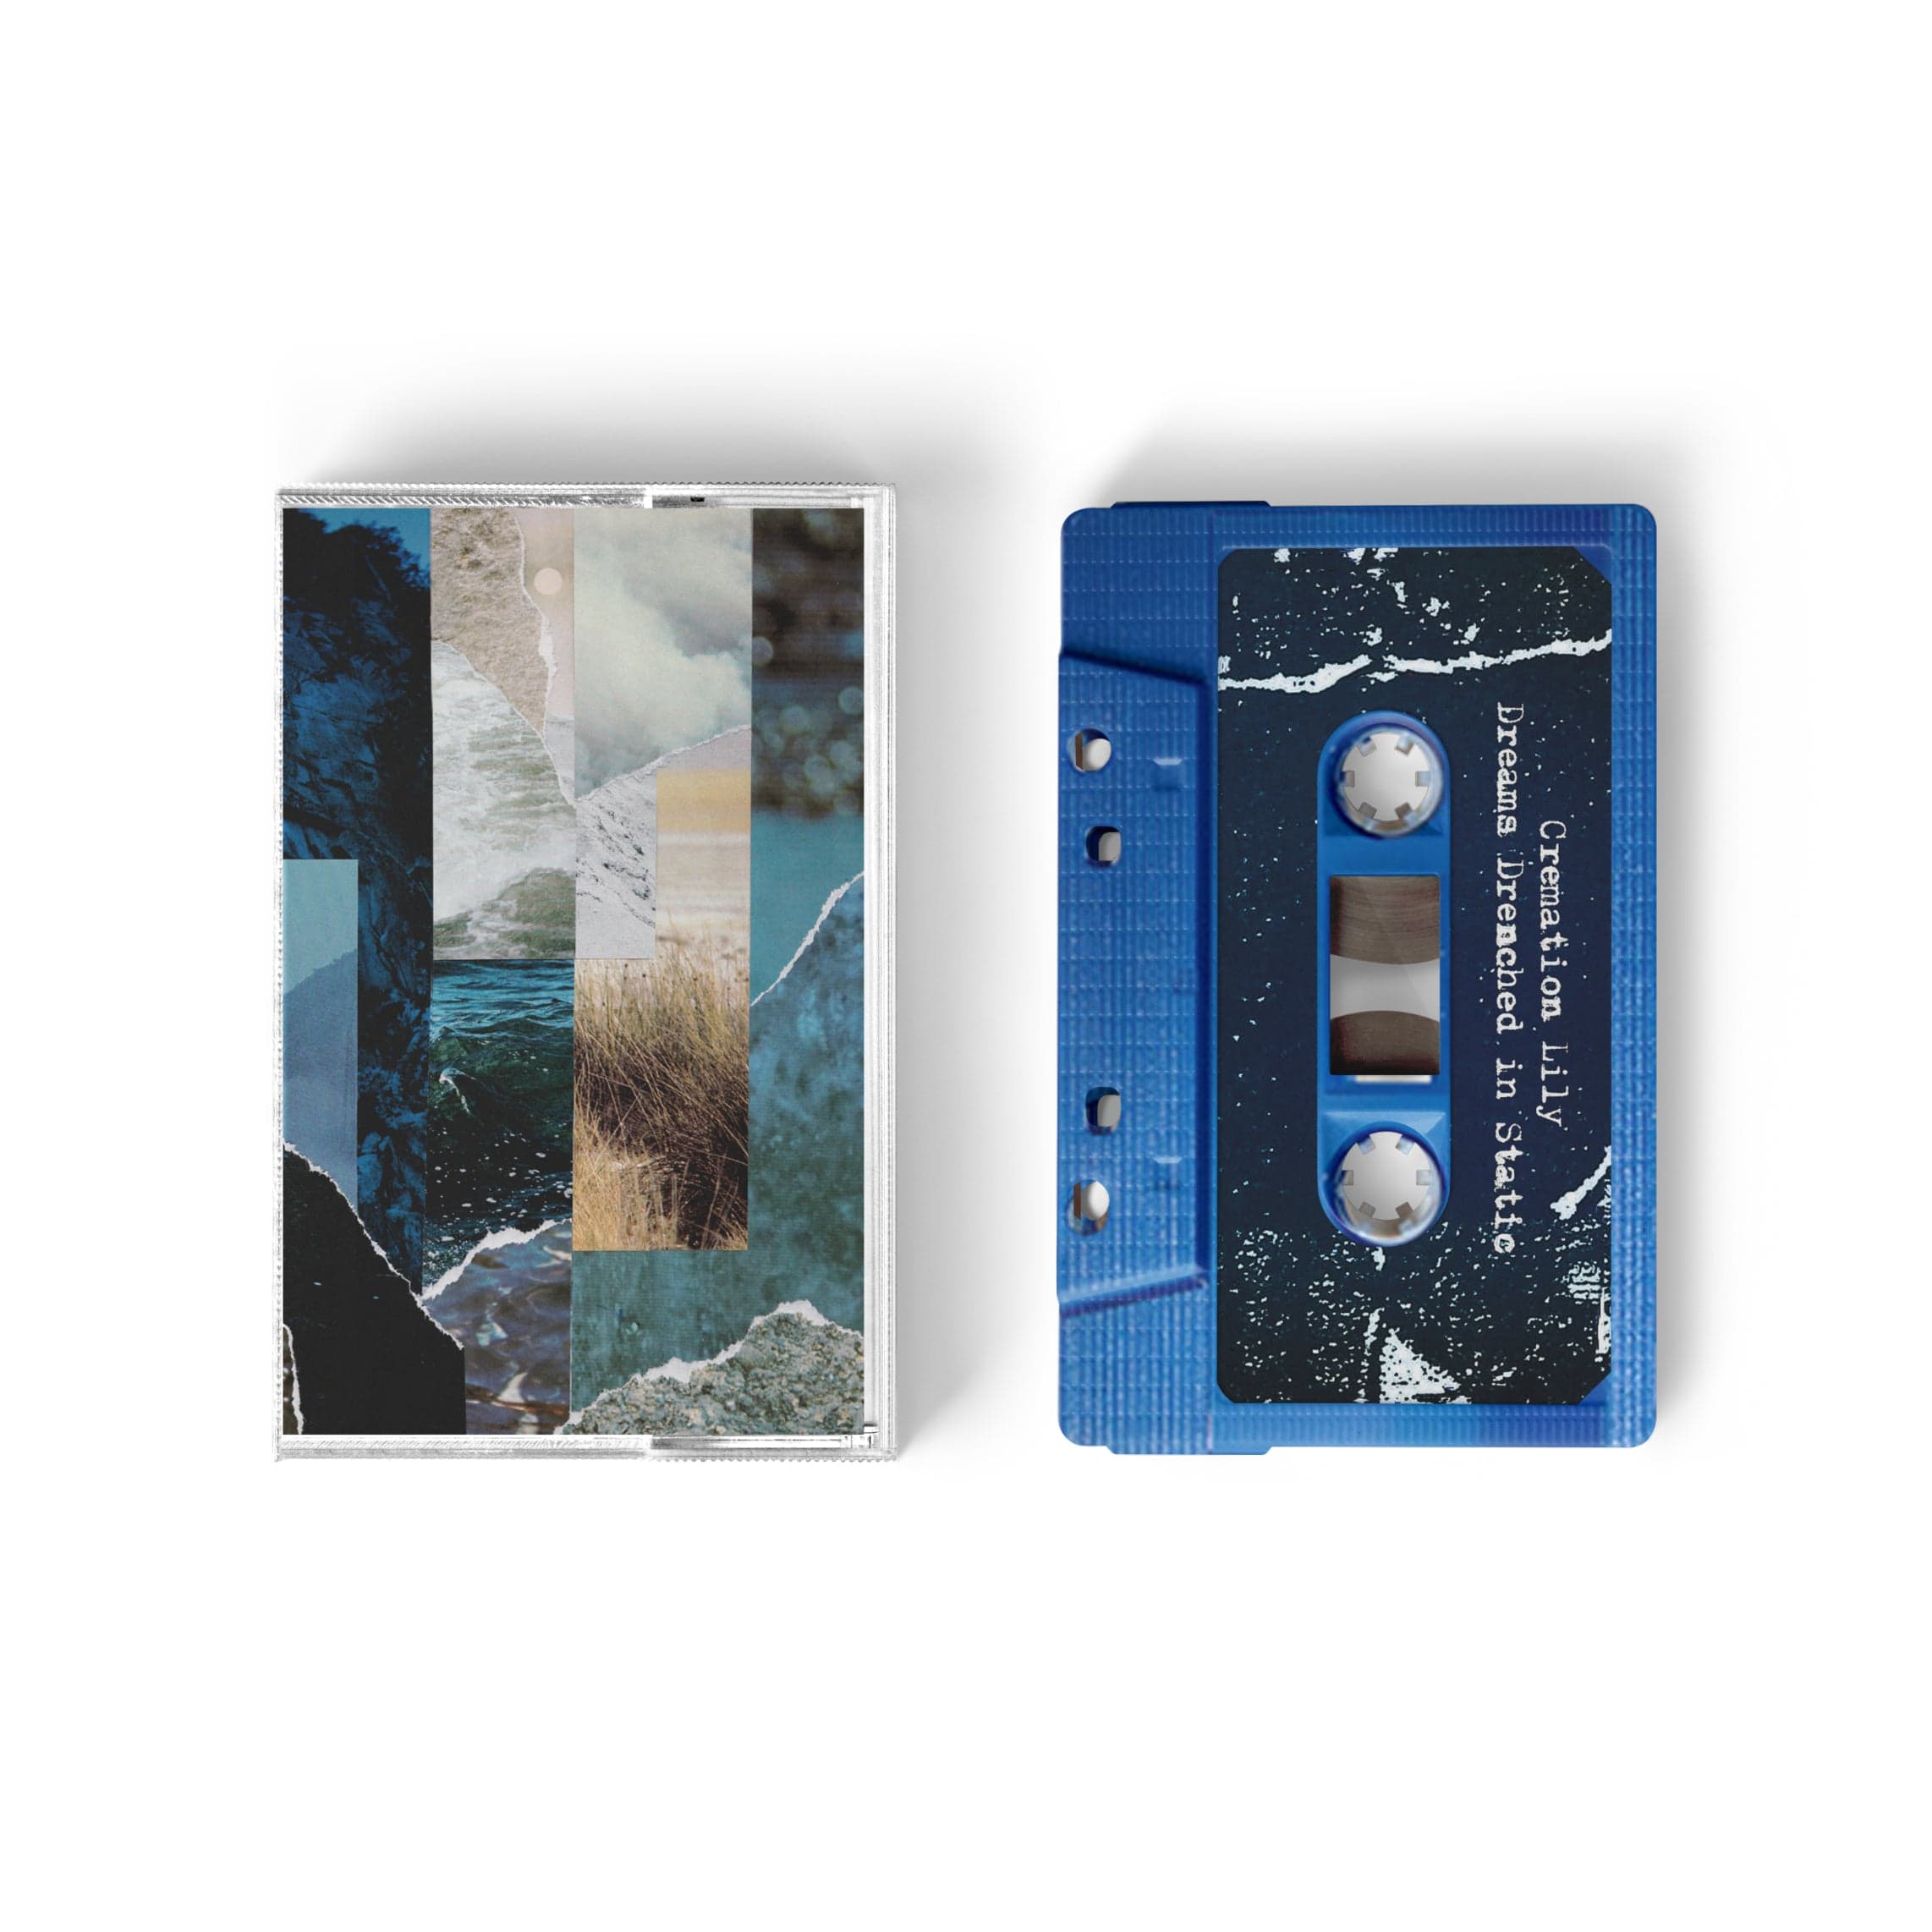 GLASSING - Twin Dream - Cassette Tape